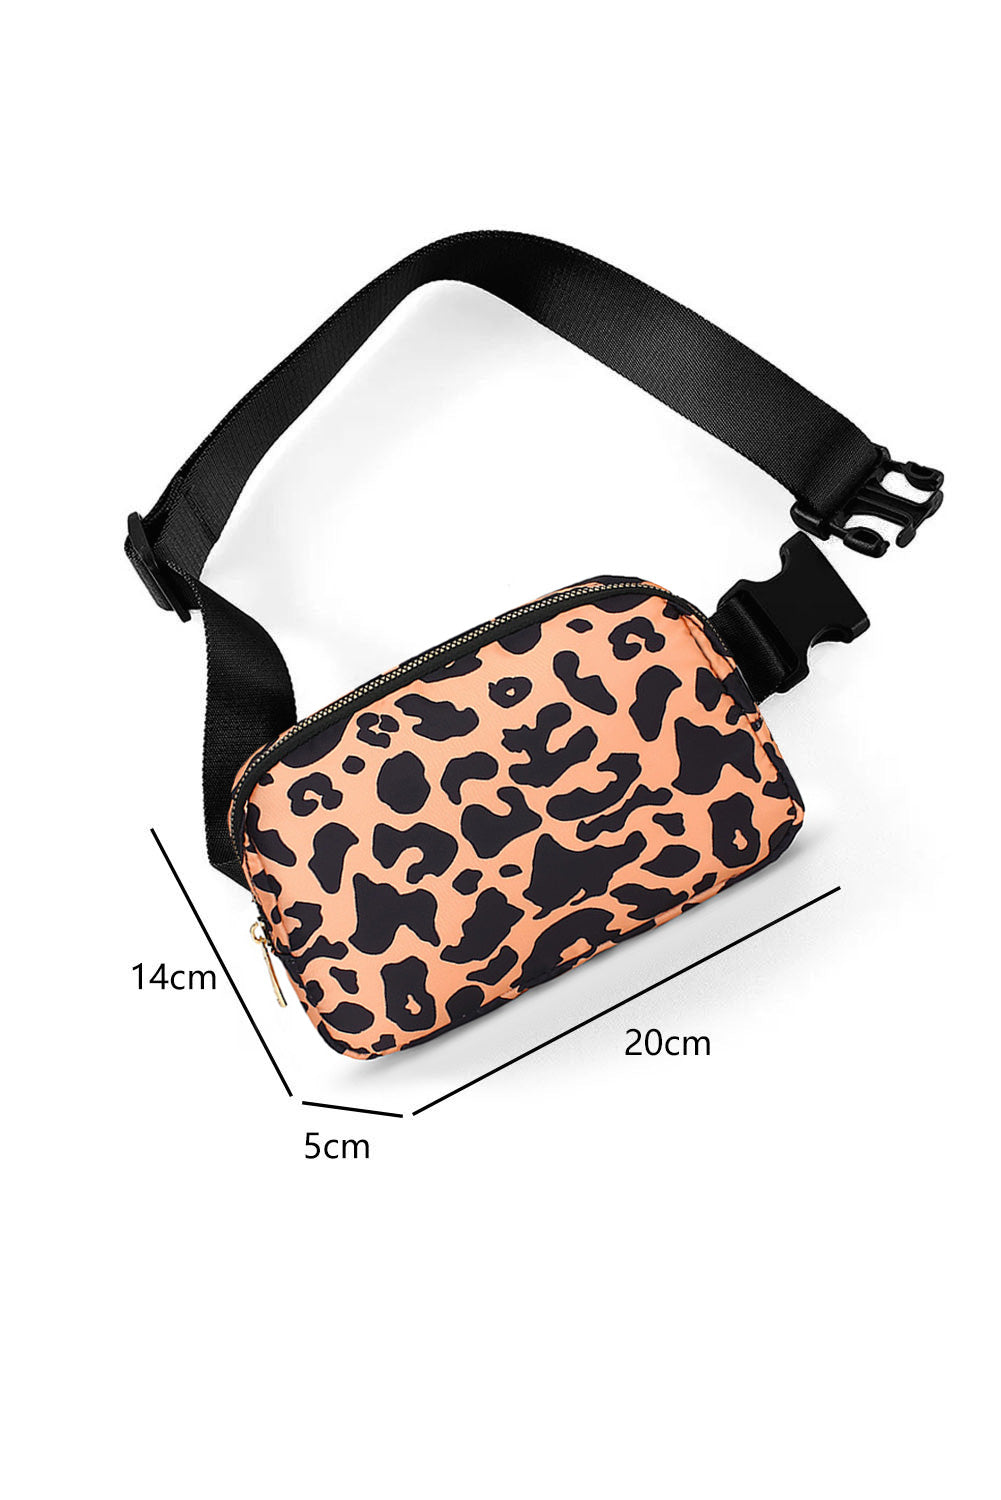 White 20*5*14cm Leopard Print Buckle Canvas Waist Pack Belt Bag